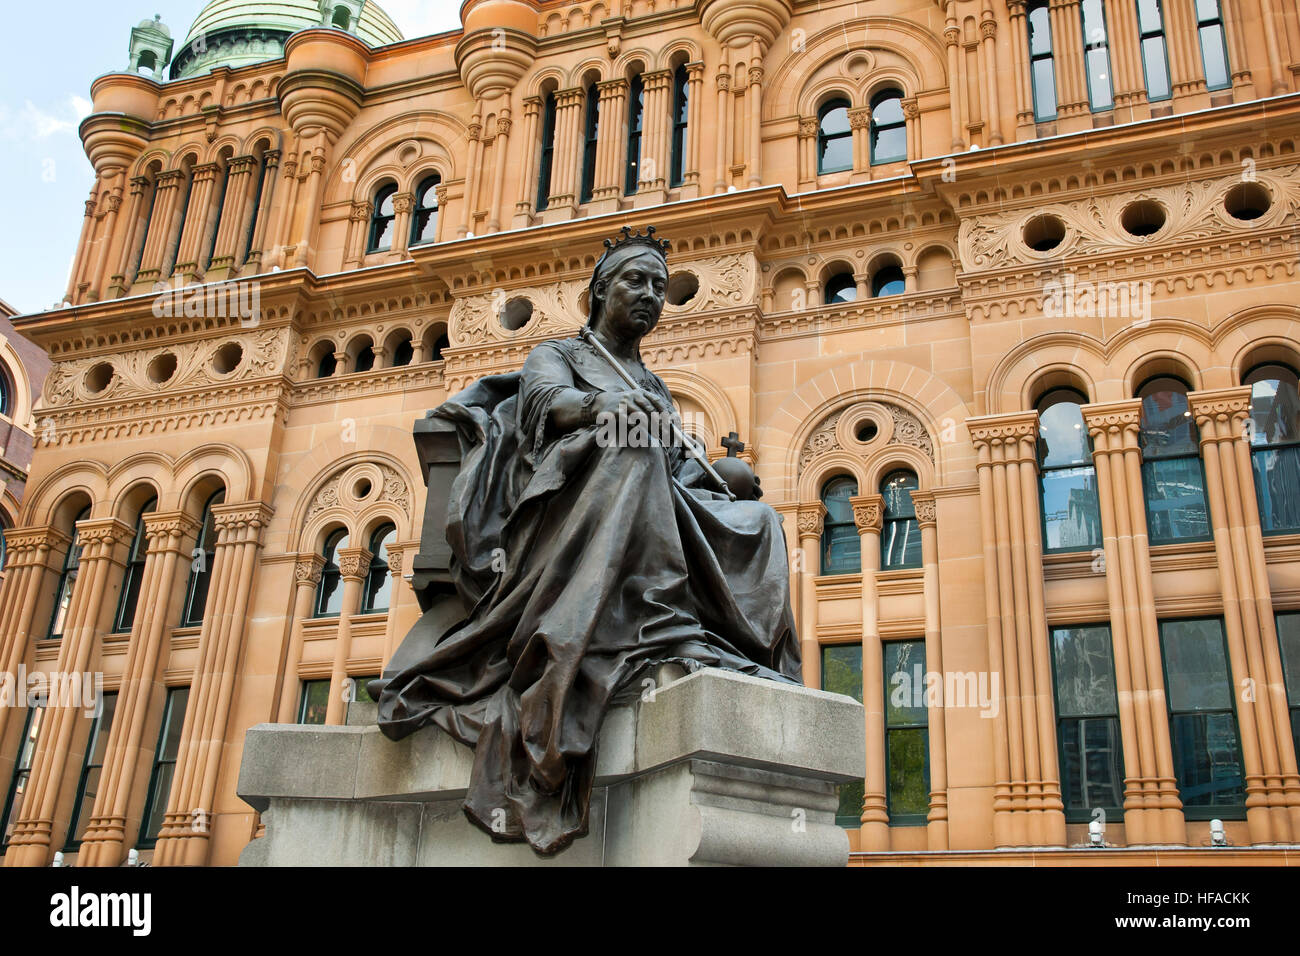 Queen Victoria Statue - Sydney - Australia Stock Photo